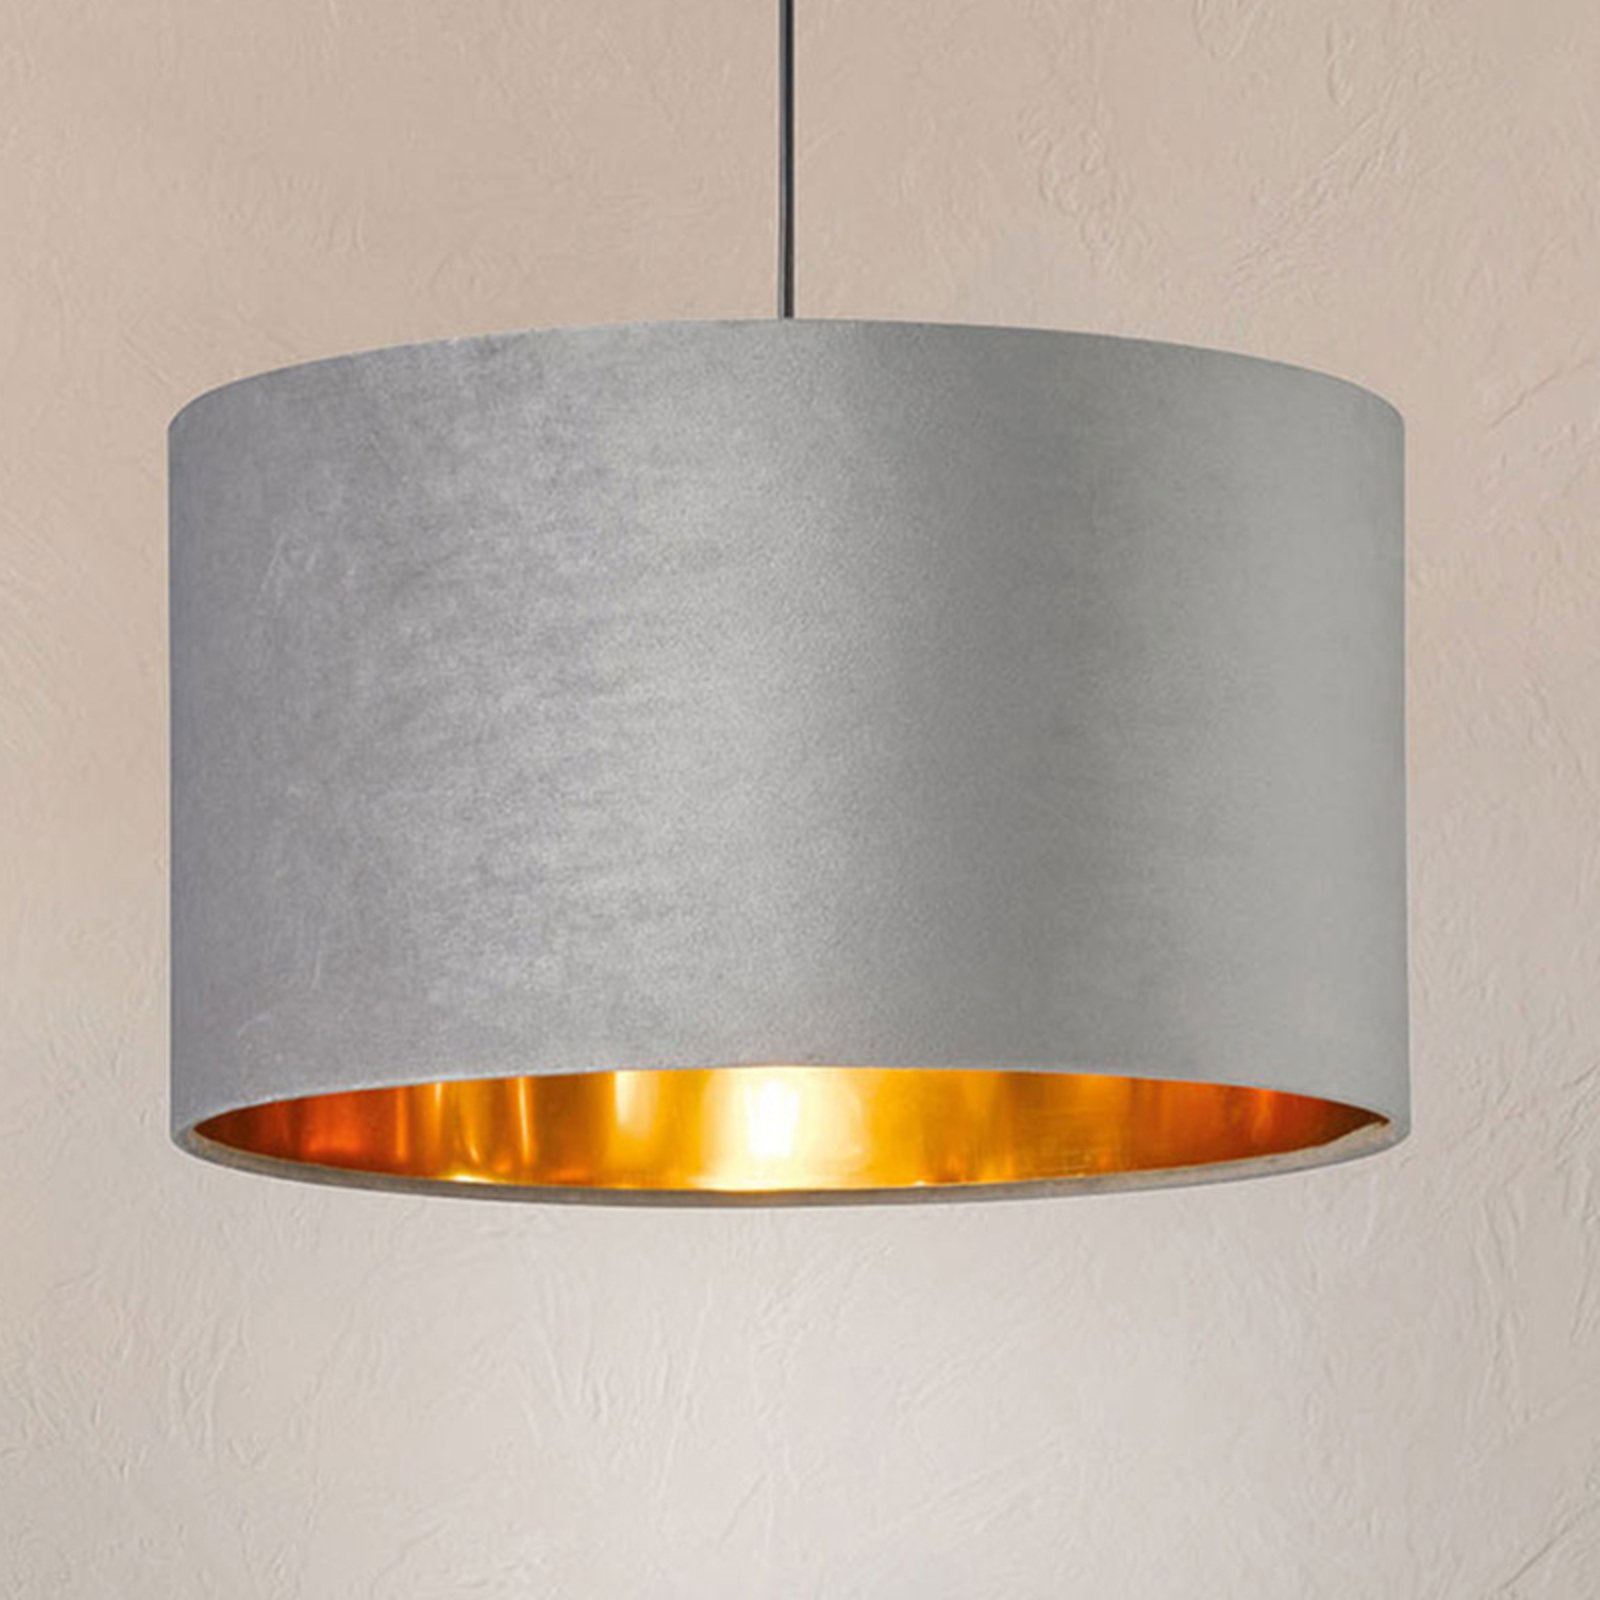 Hanglamp Aura met fluwelen kap, Ø 40 cm, grijs